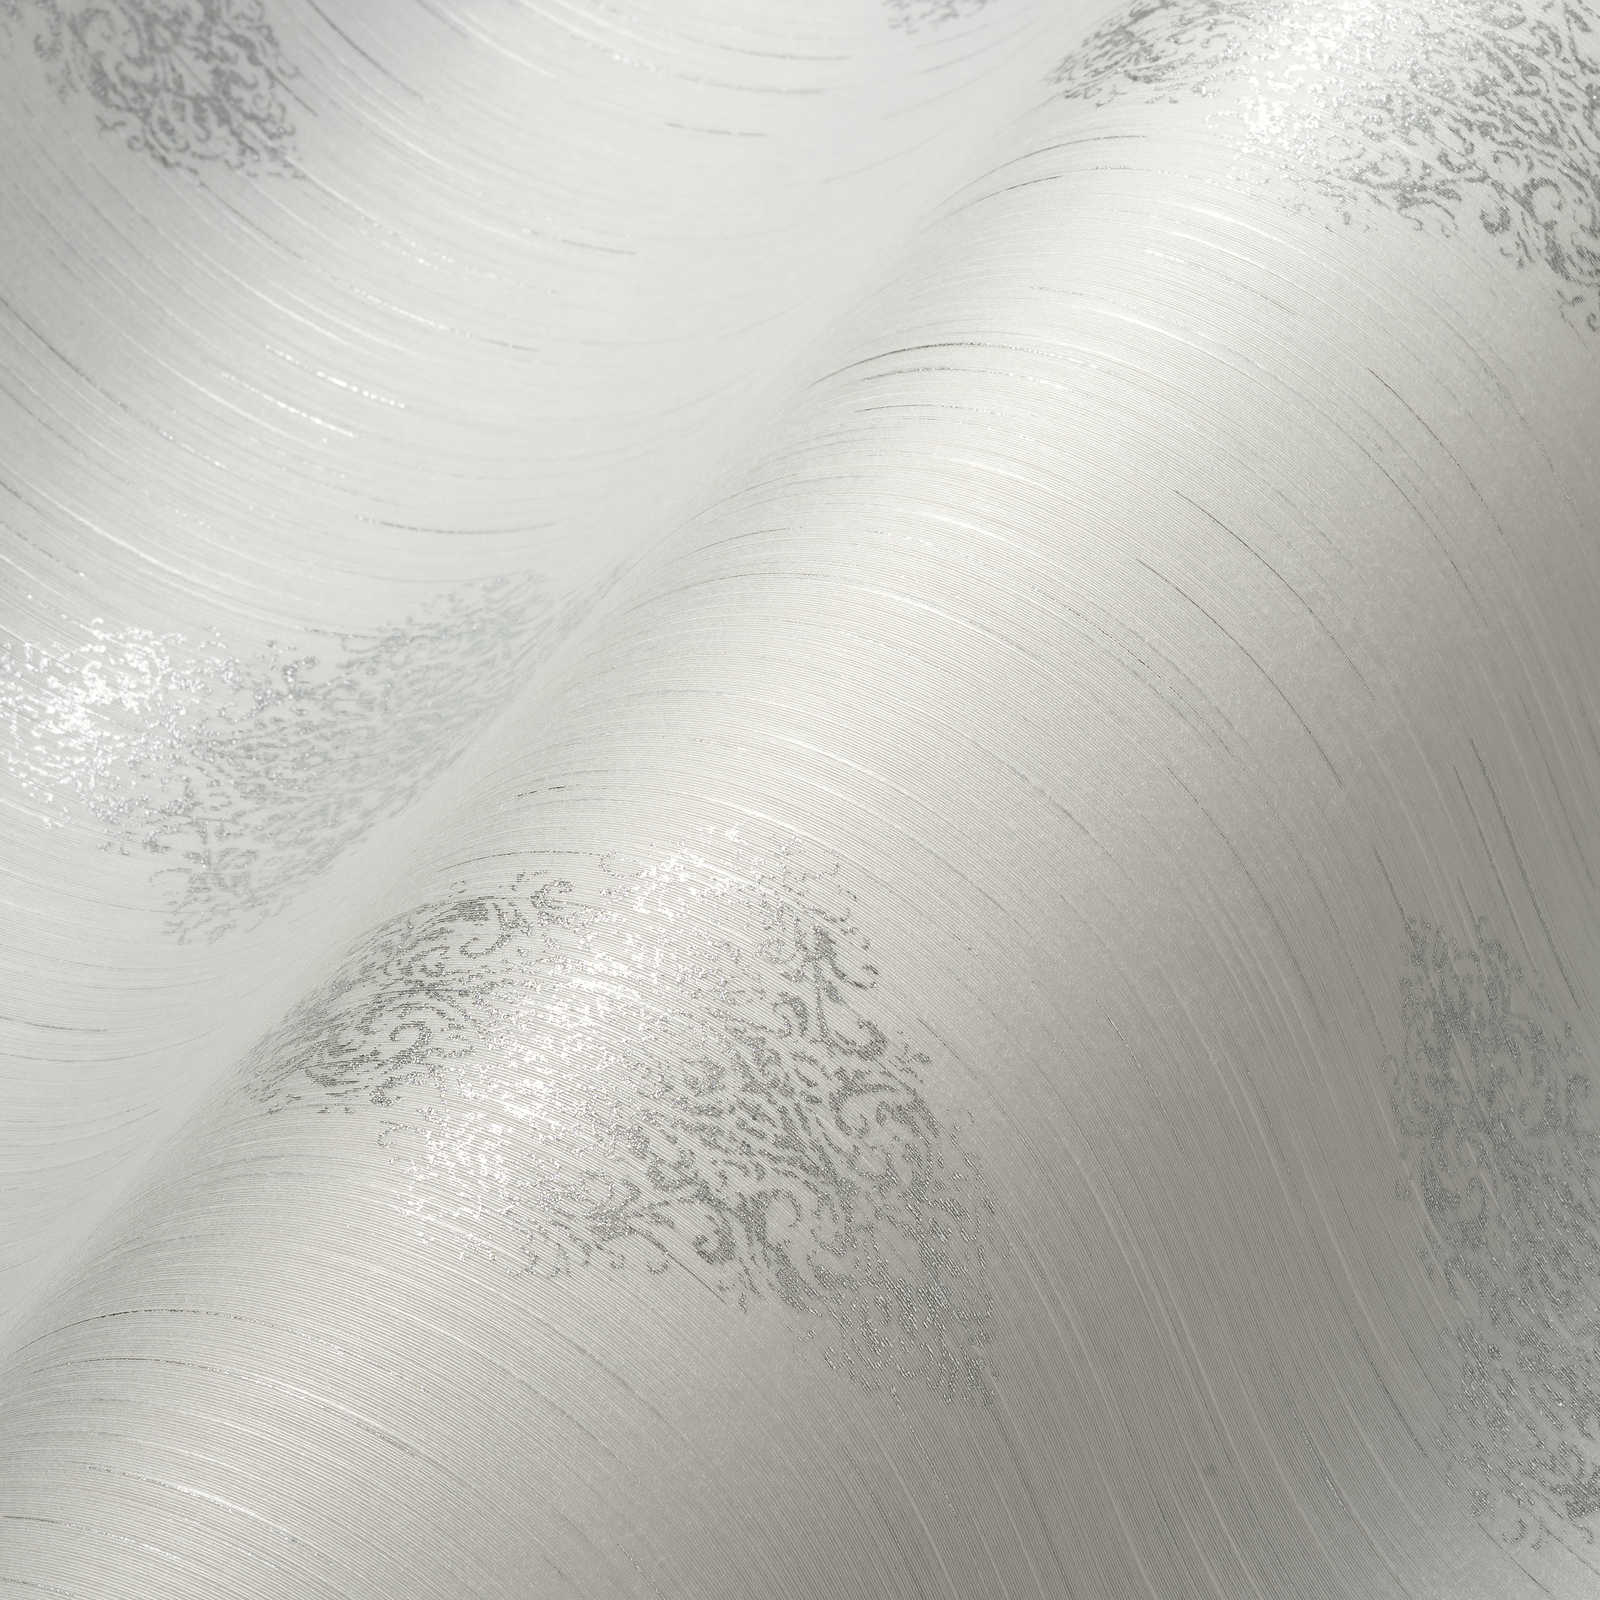             Wallpaper ornament design in used look, metallic effect - white, silver
        